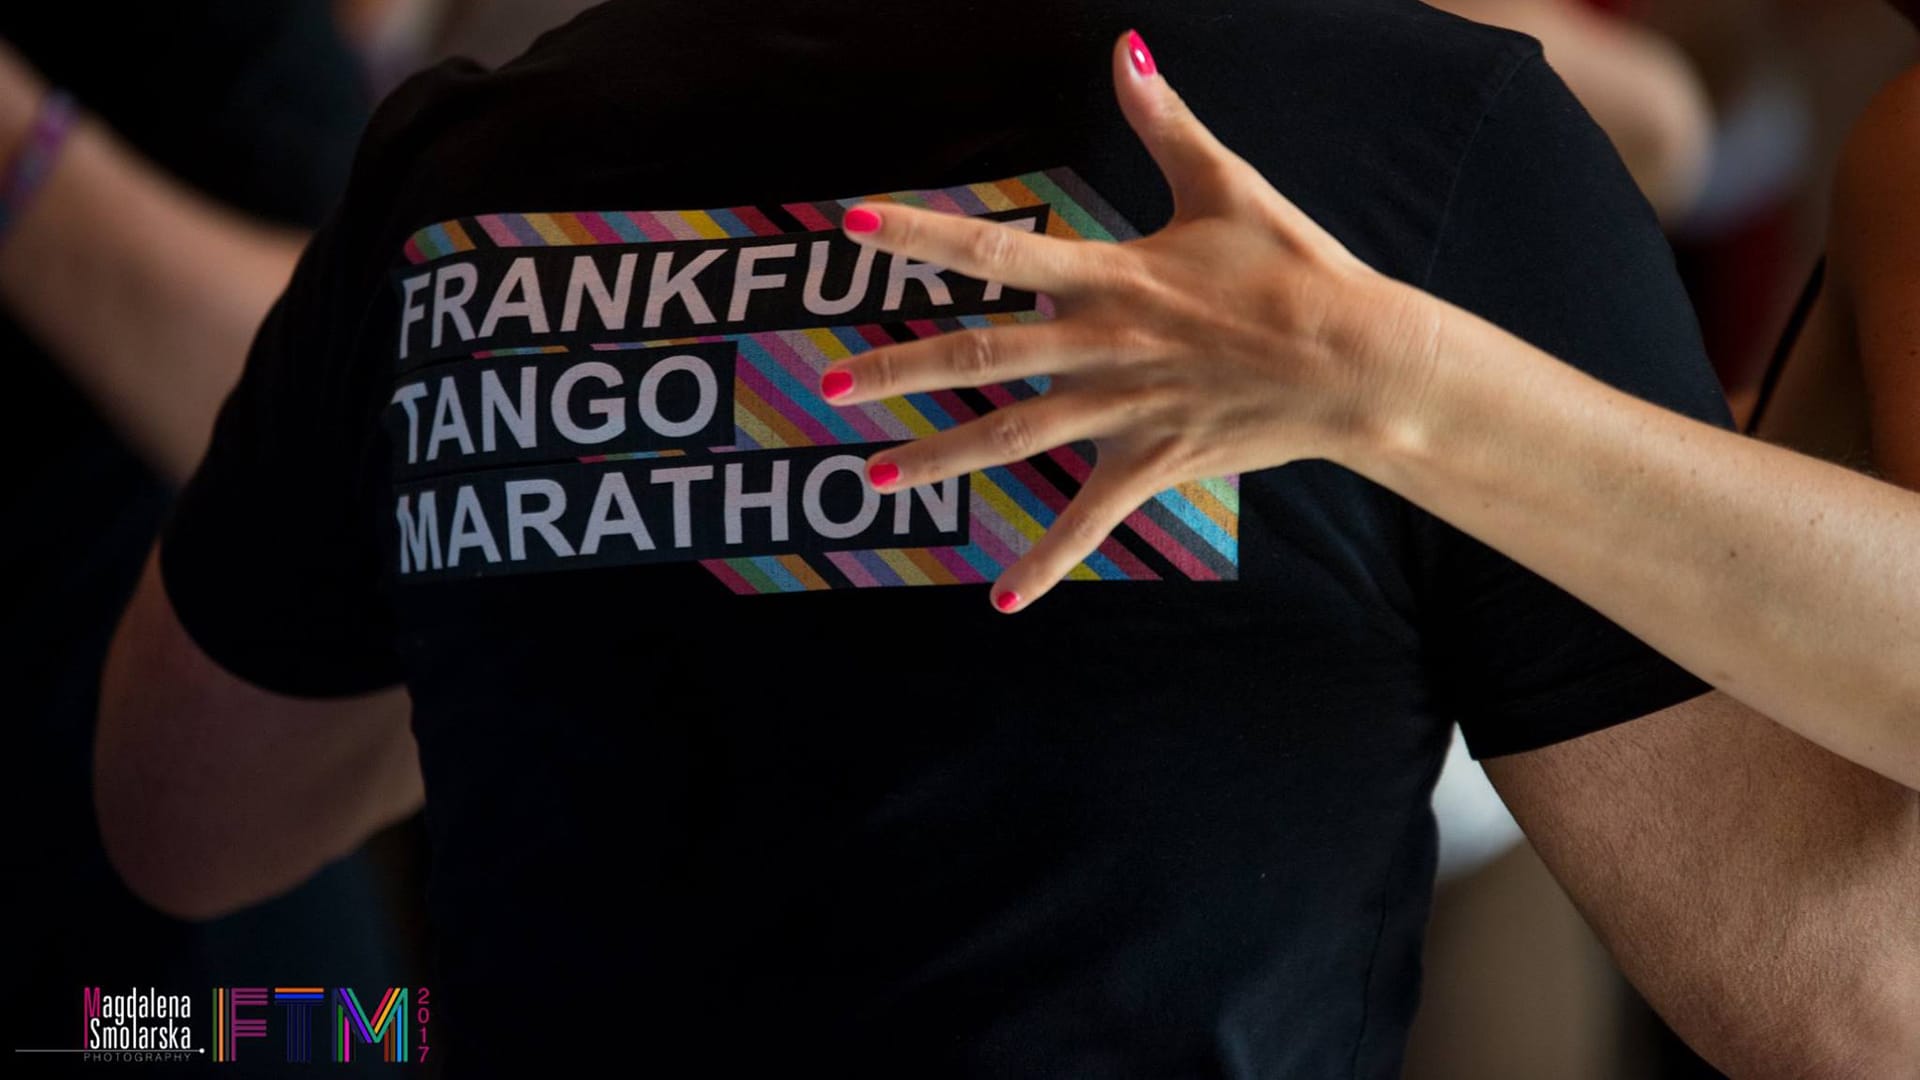 Tango Cherries - Frankfurt Tango Marathon 2017 (Germany)